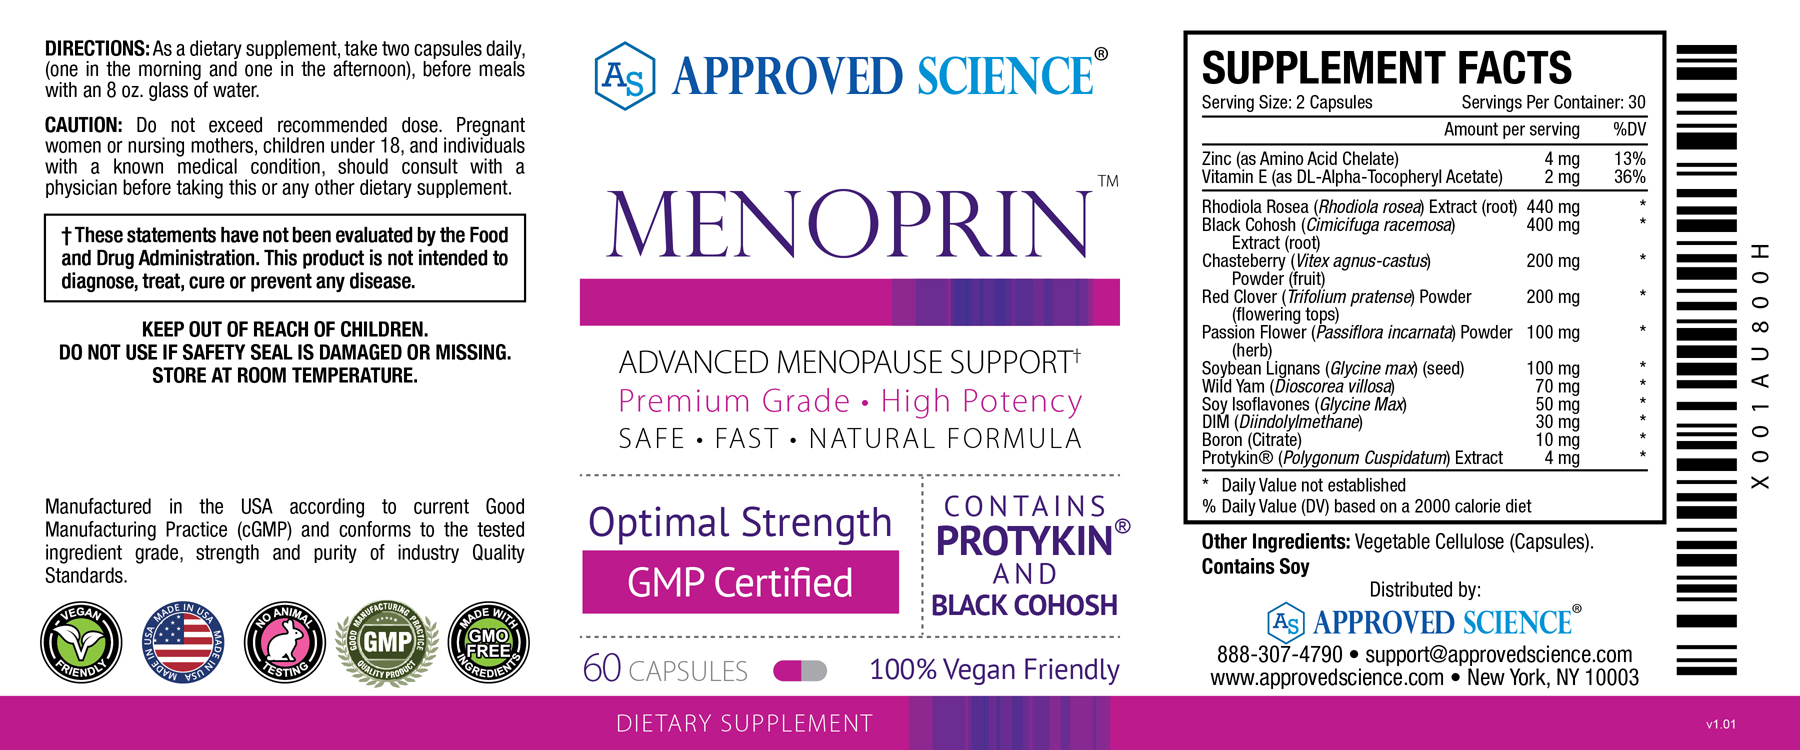 Menoprin Supplement Facts